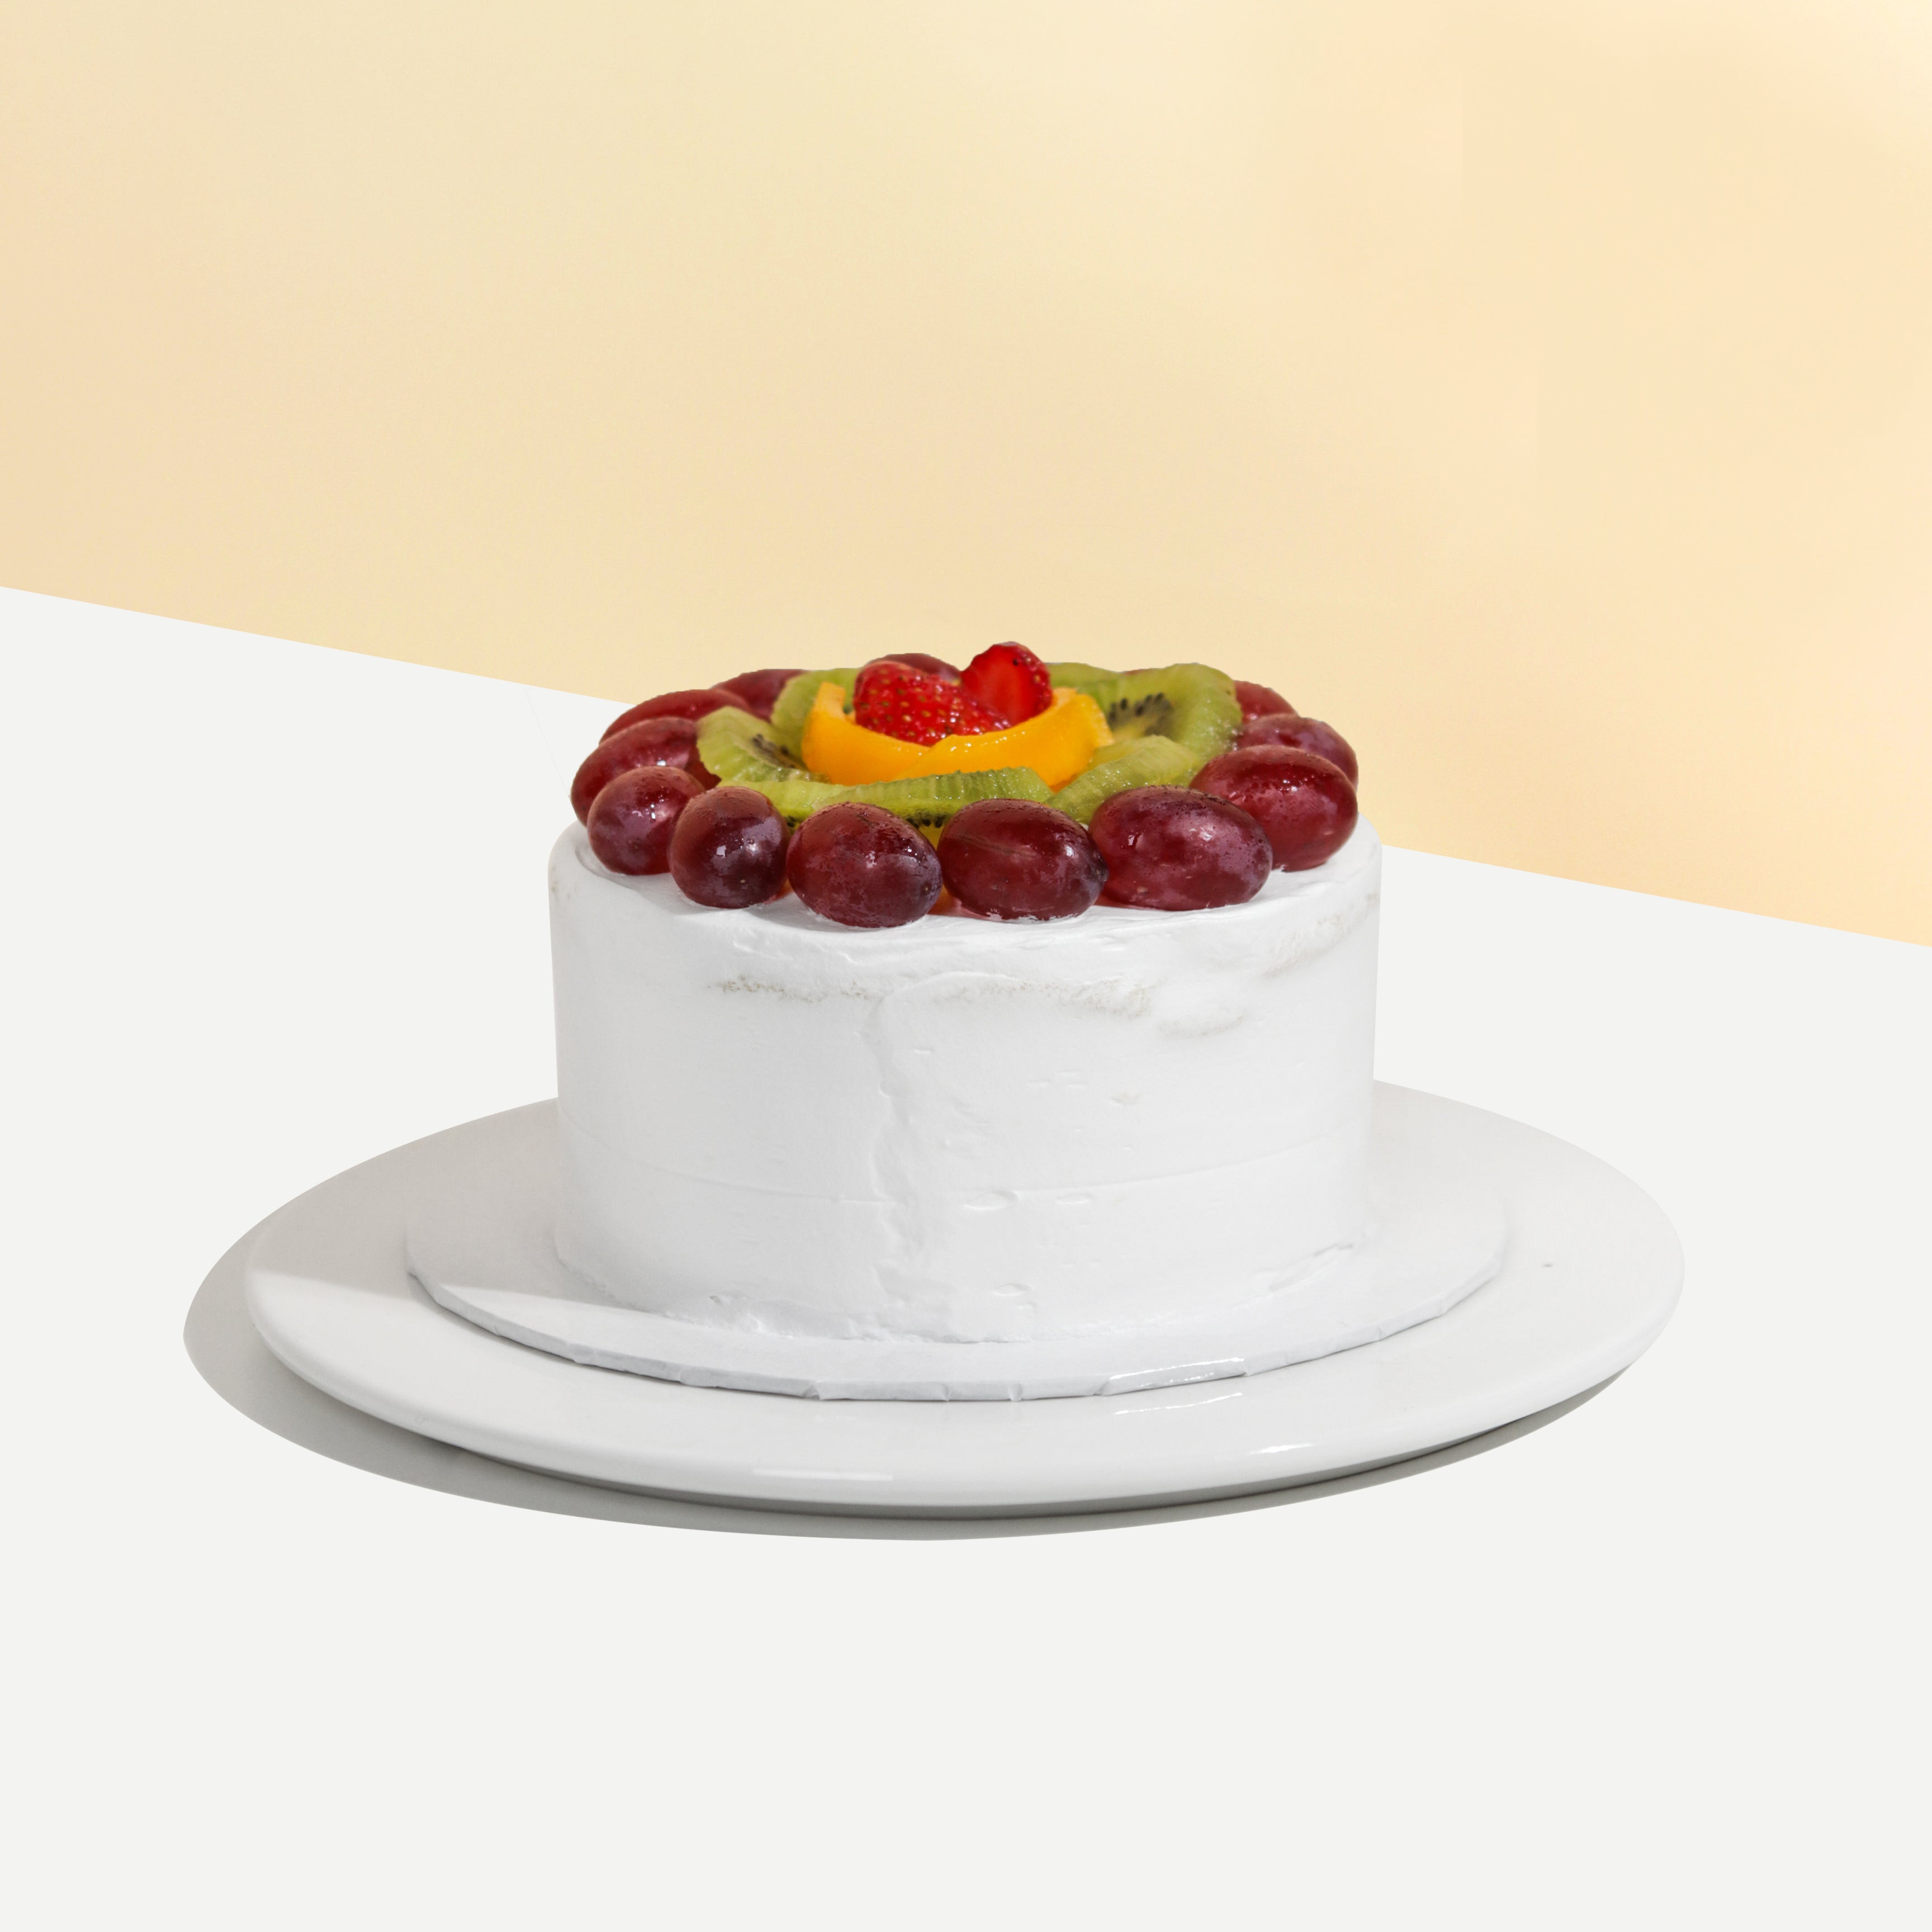 Fruit cake recipe - BBC Food